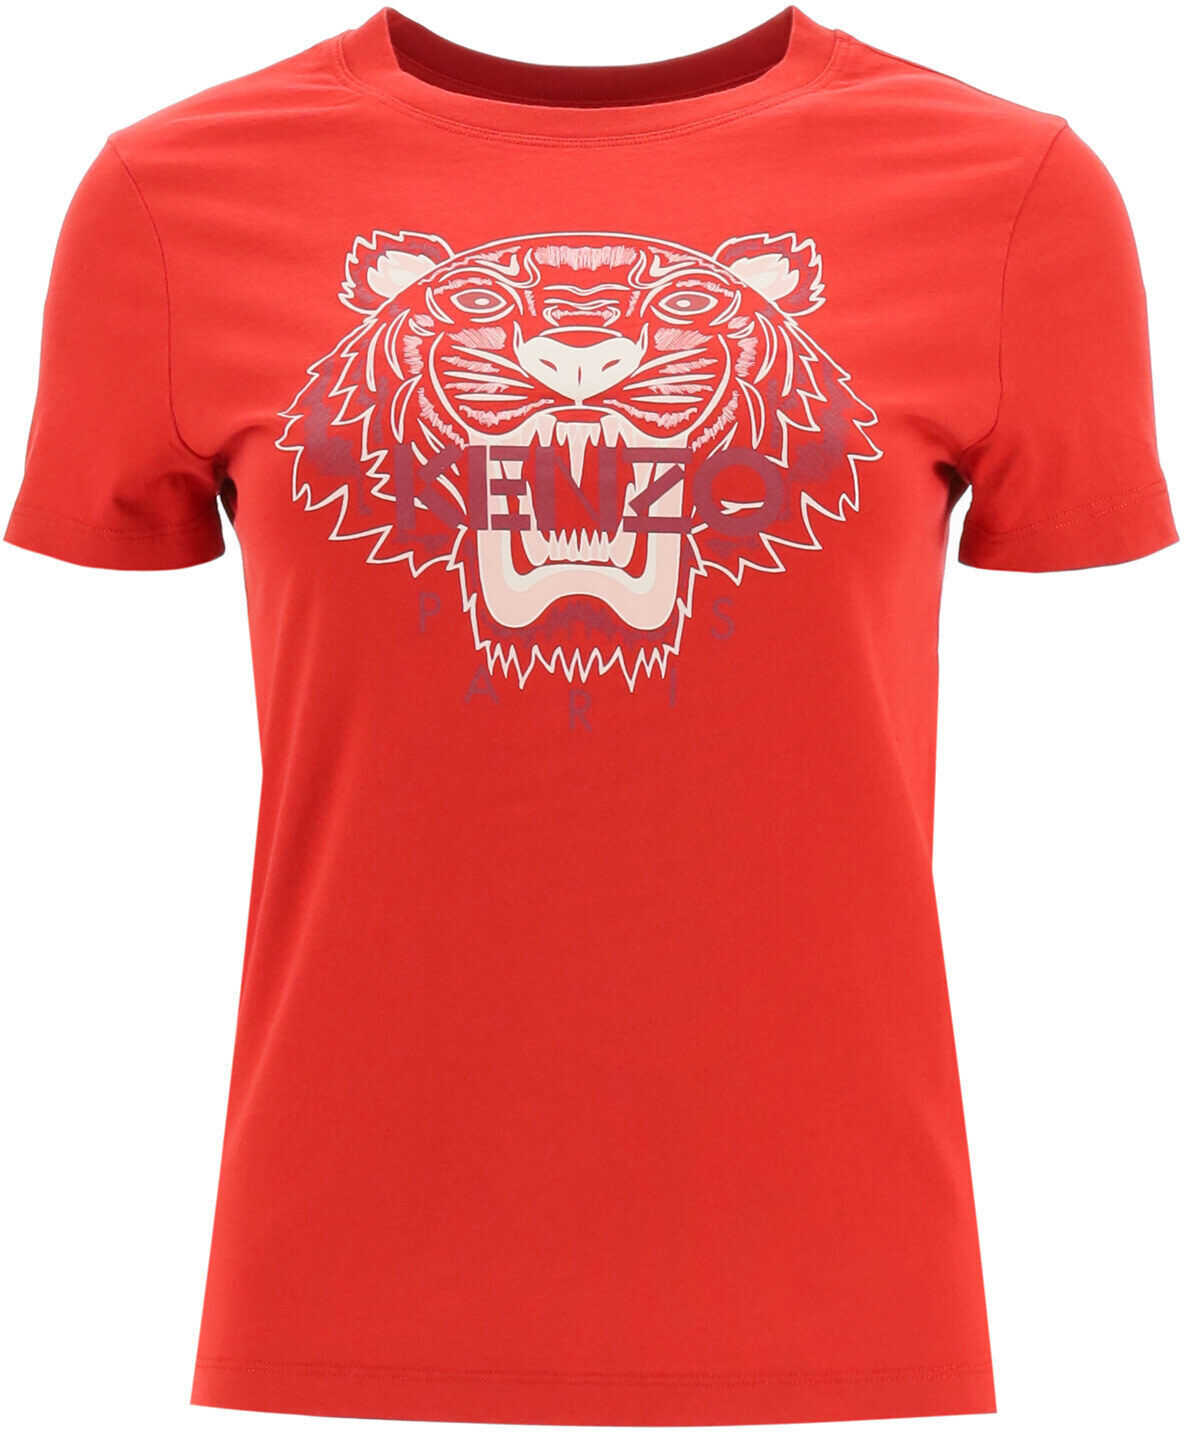 Kenzo Tiger Print T-Shirt* CERISE